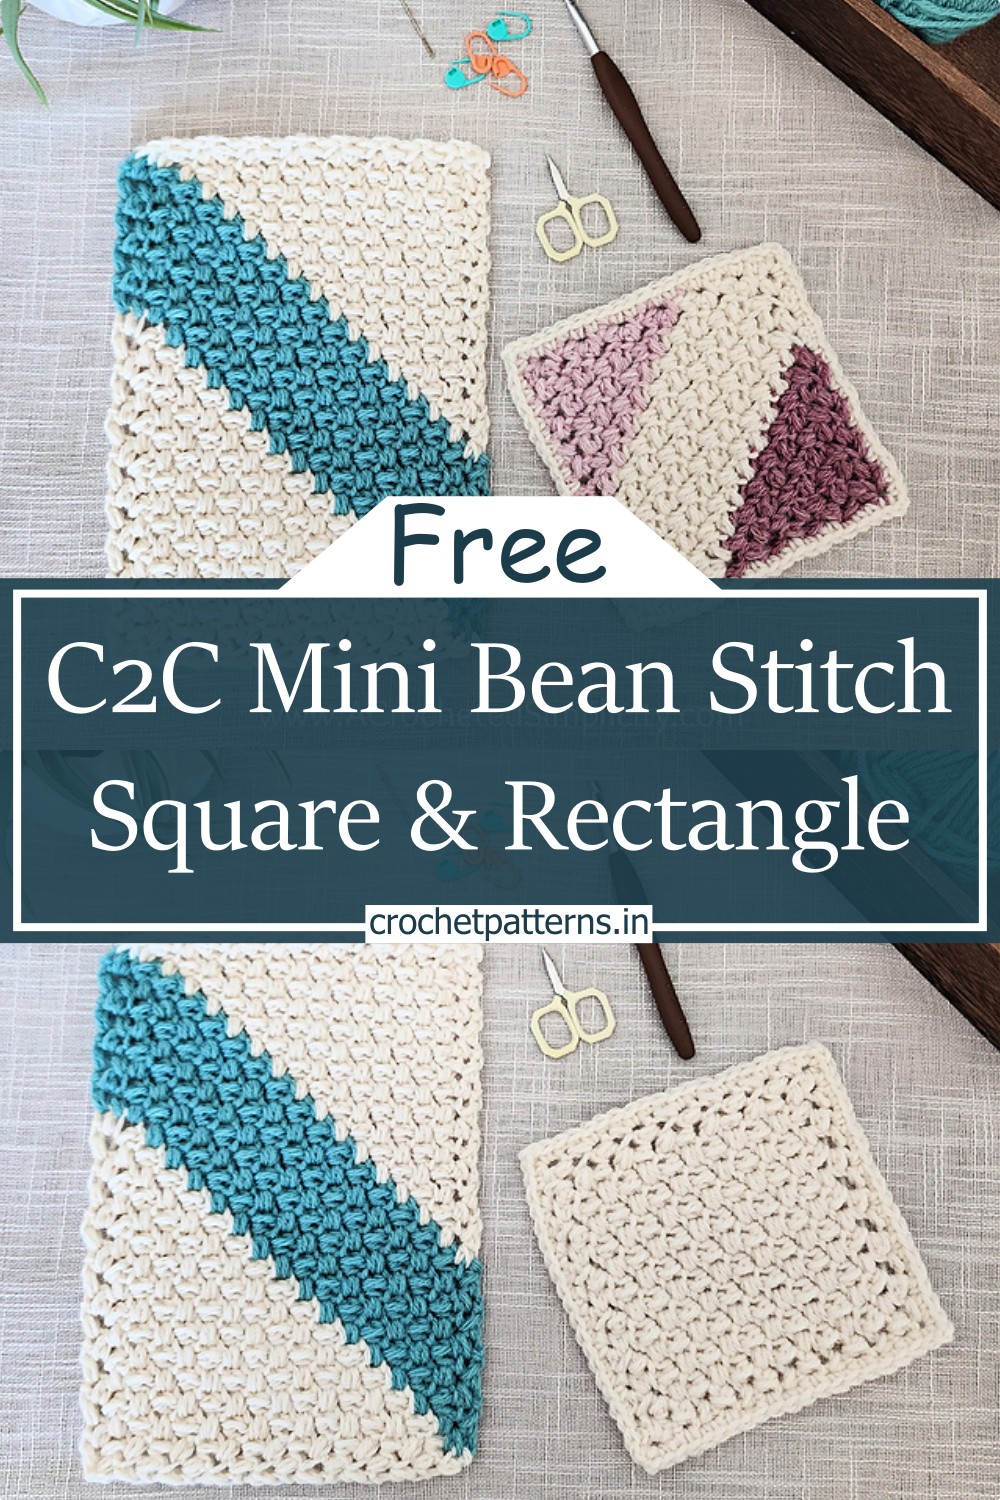 C2C Mini Bean Stitch Square & Rectangle